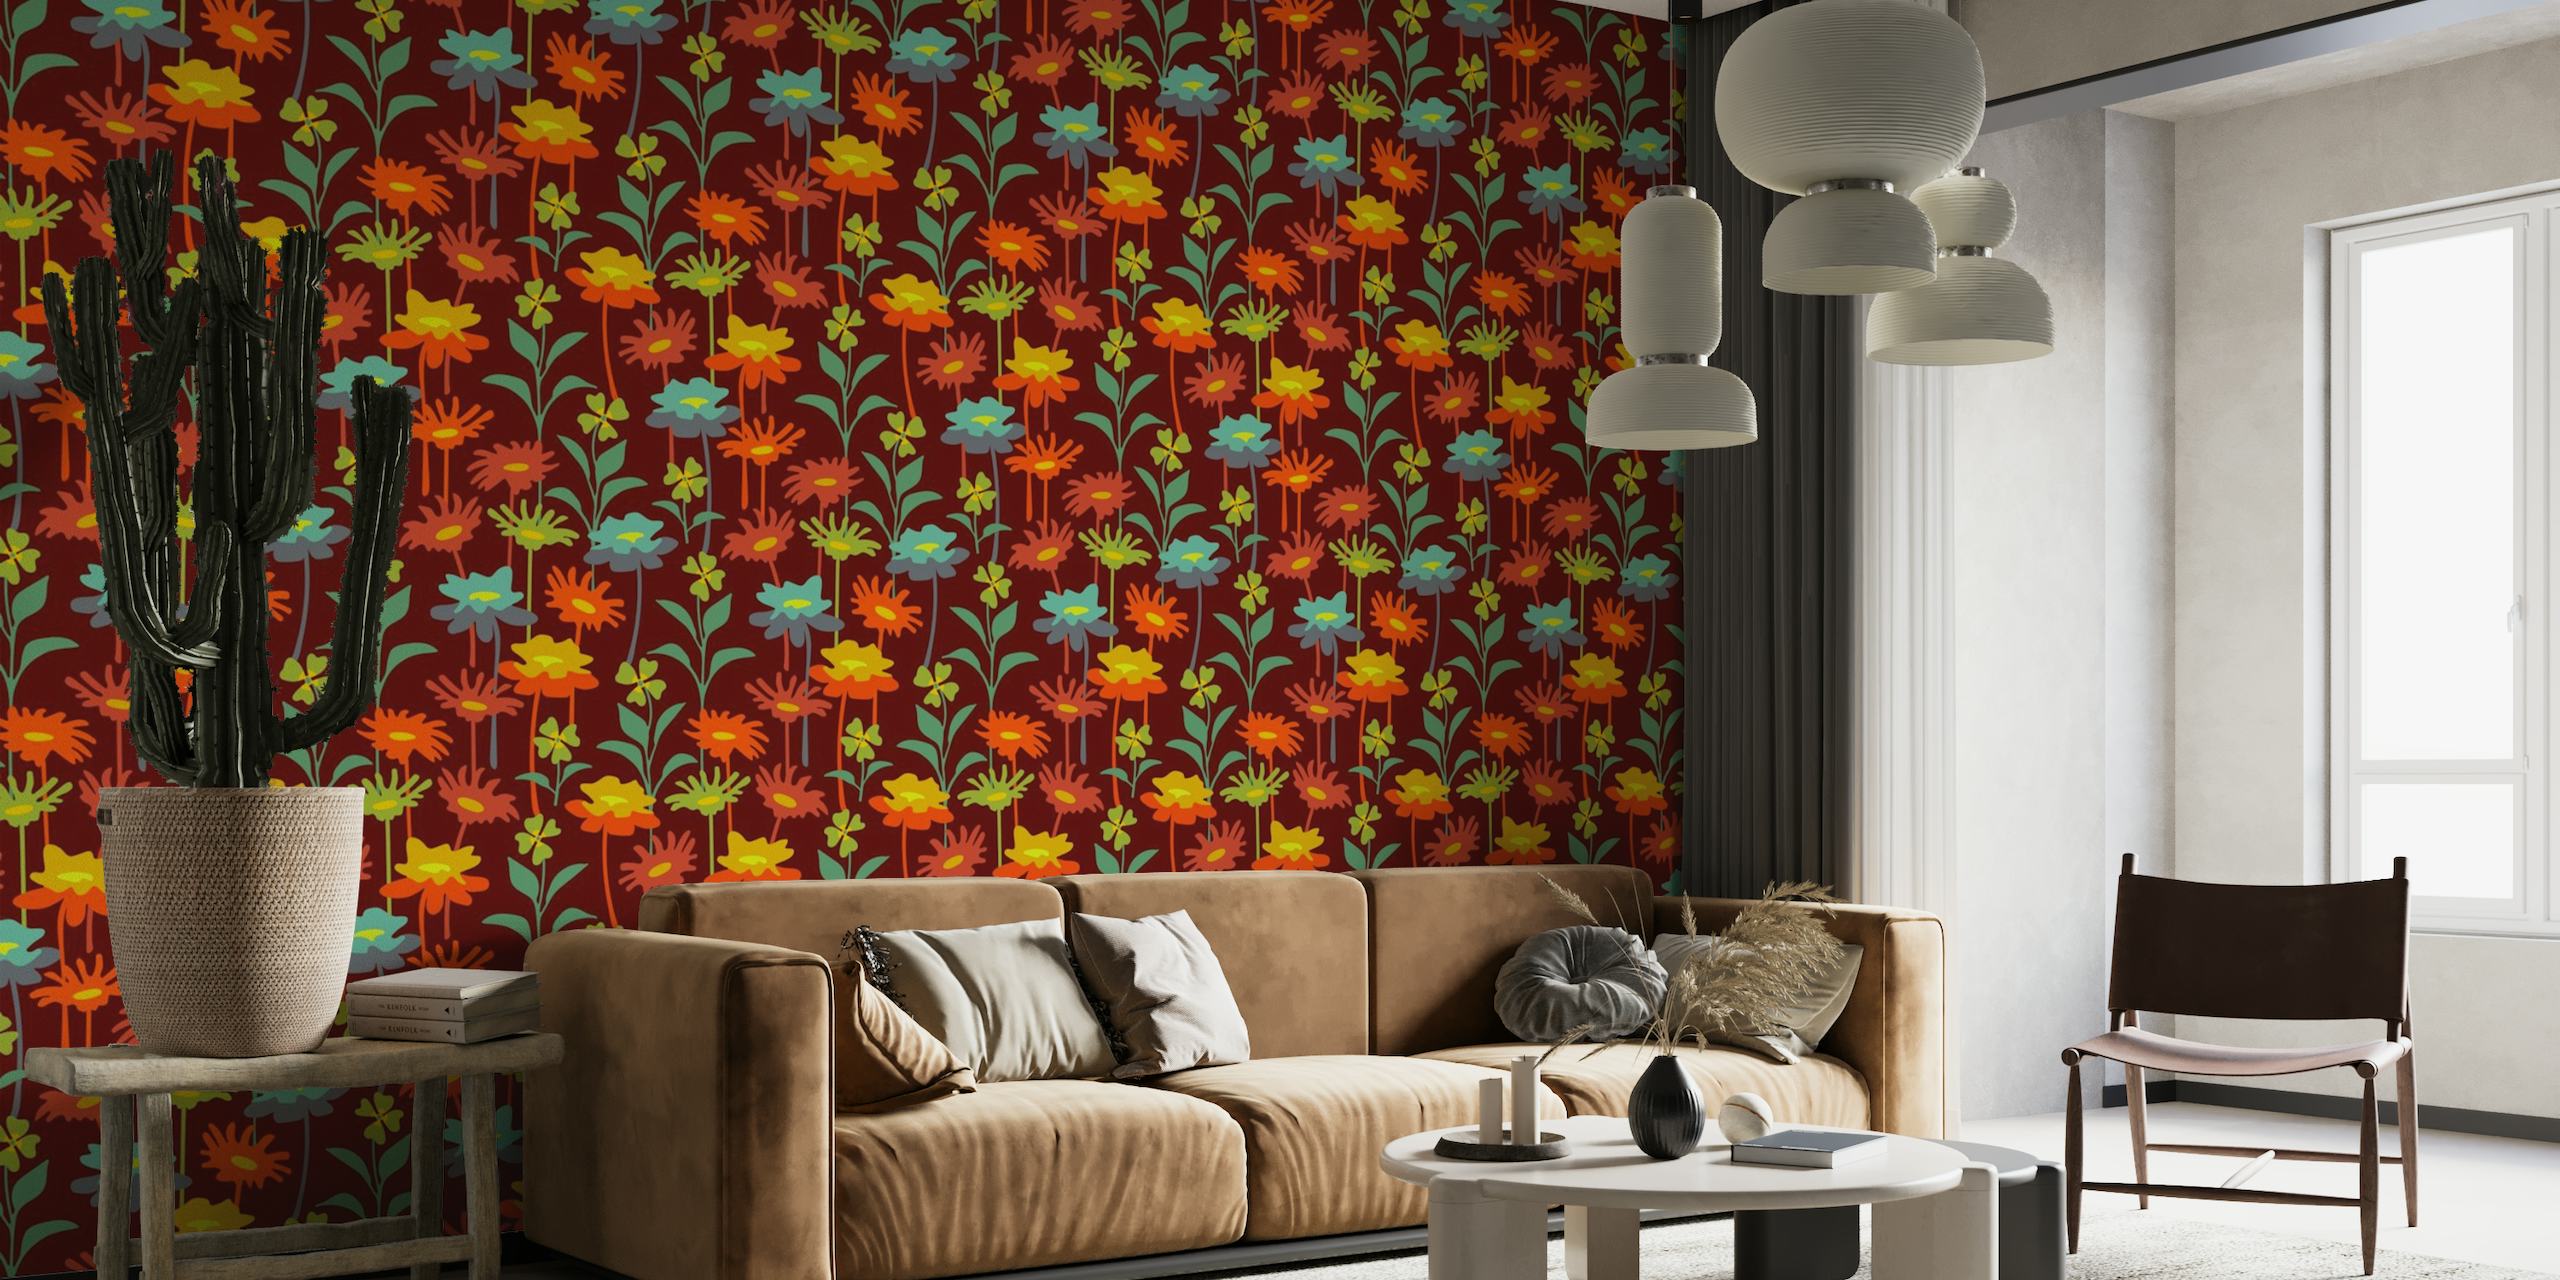 Mural floral de inspiración vintage con cálidos colores del atardecer sobre un fondo rojo intenso